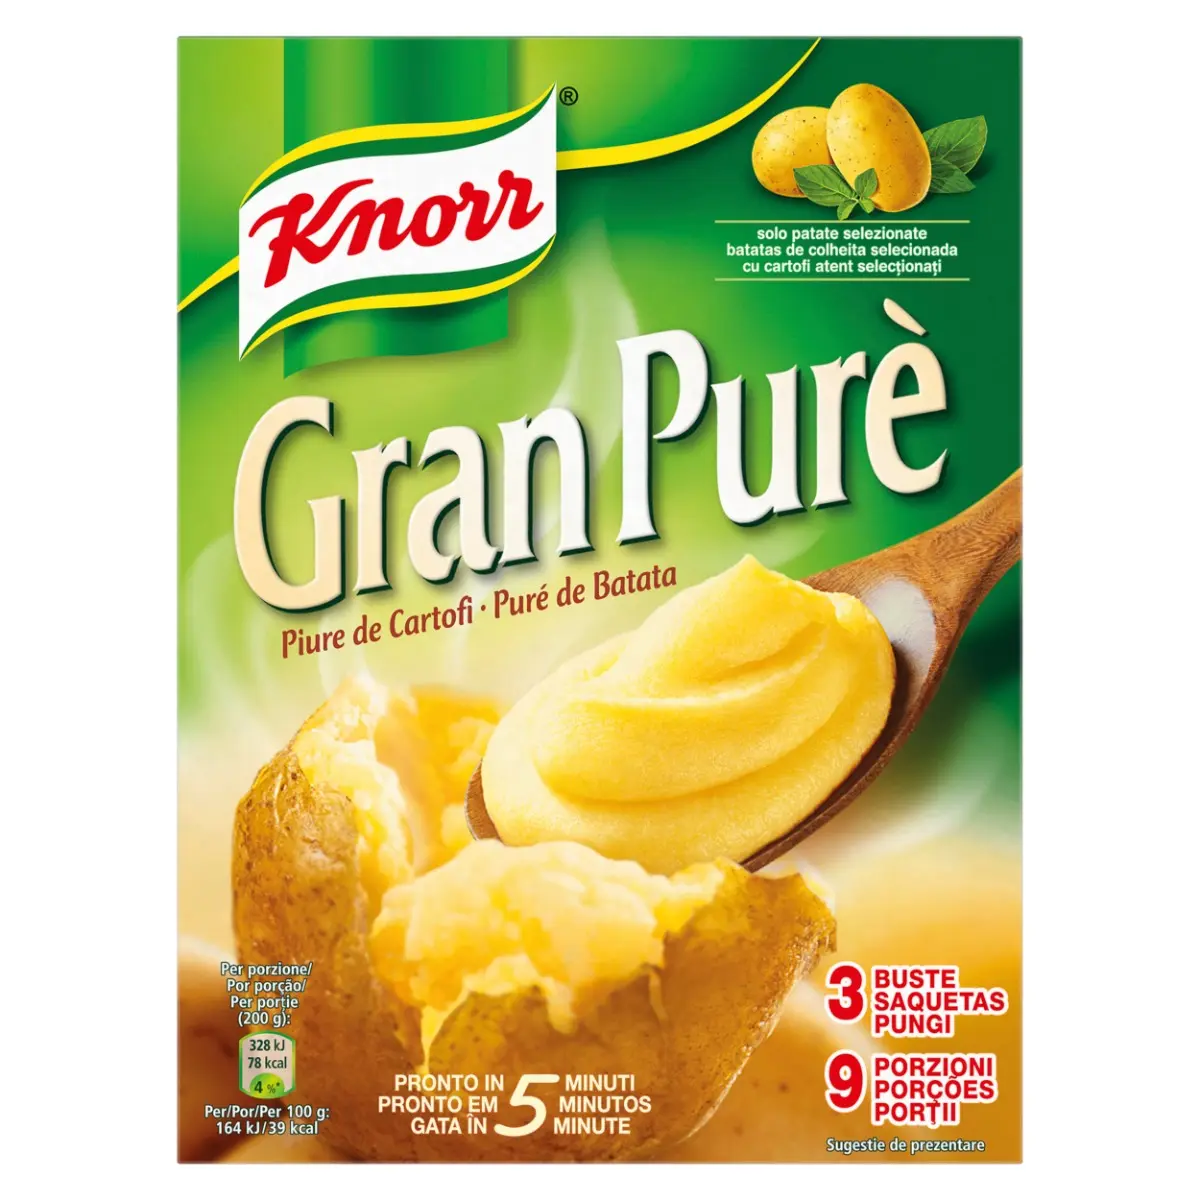 Piure instant Knorr Gran Pure, 225g